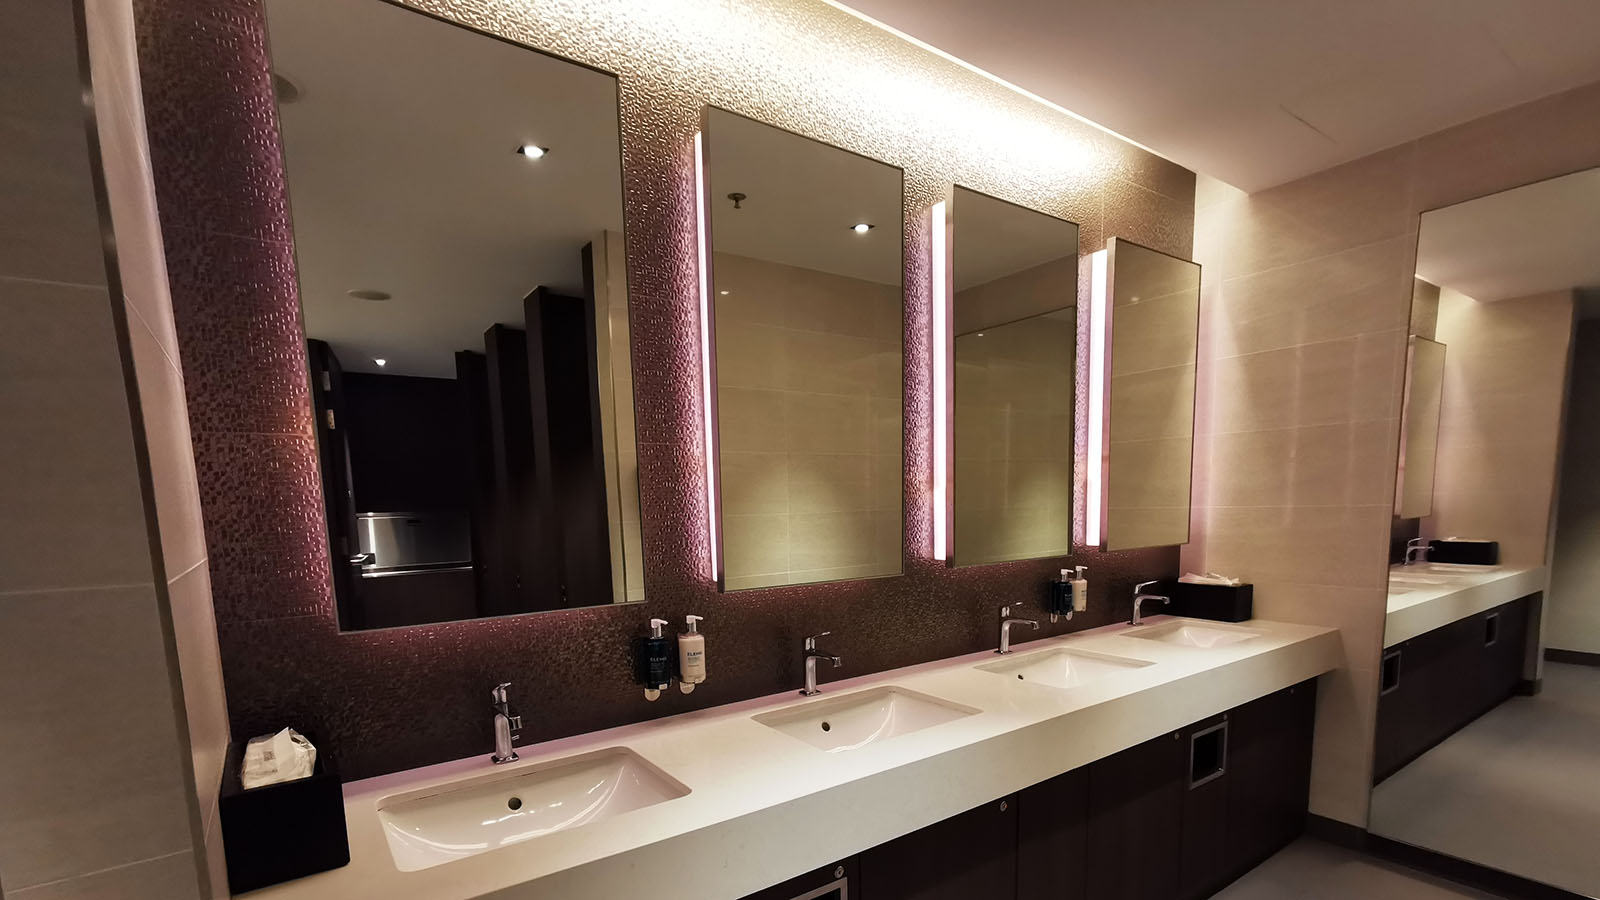 Washroom at the British Airways Lounge, Singapore